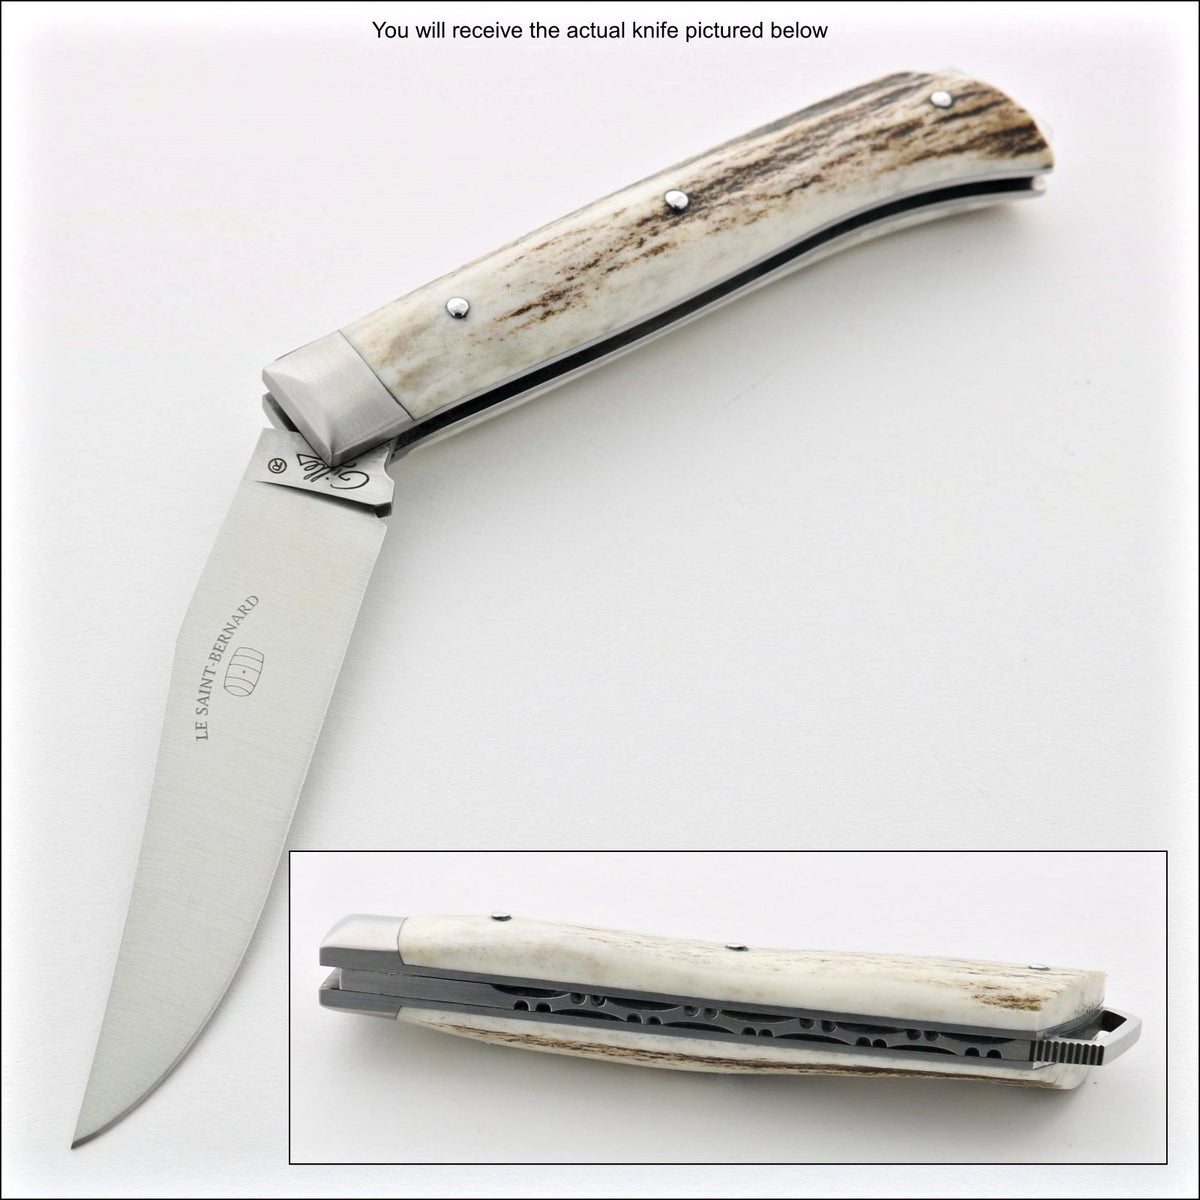 Le Saint-Bernard Pocket Knife - Deer Stag Handle - E